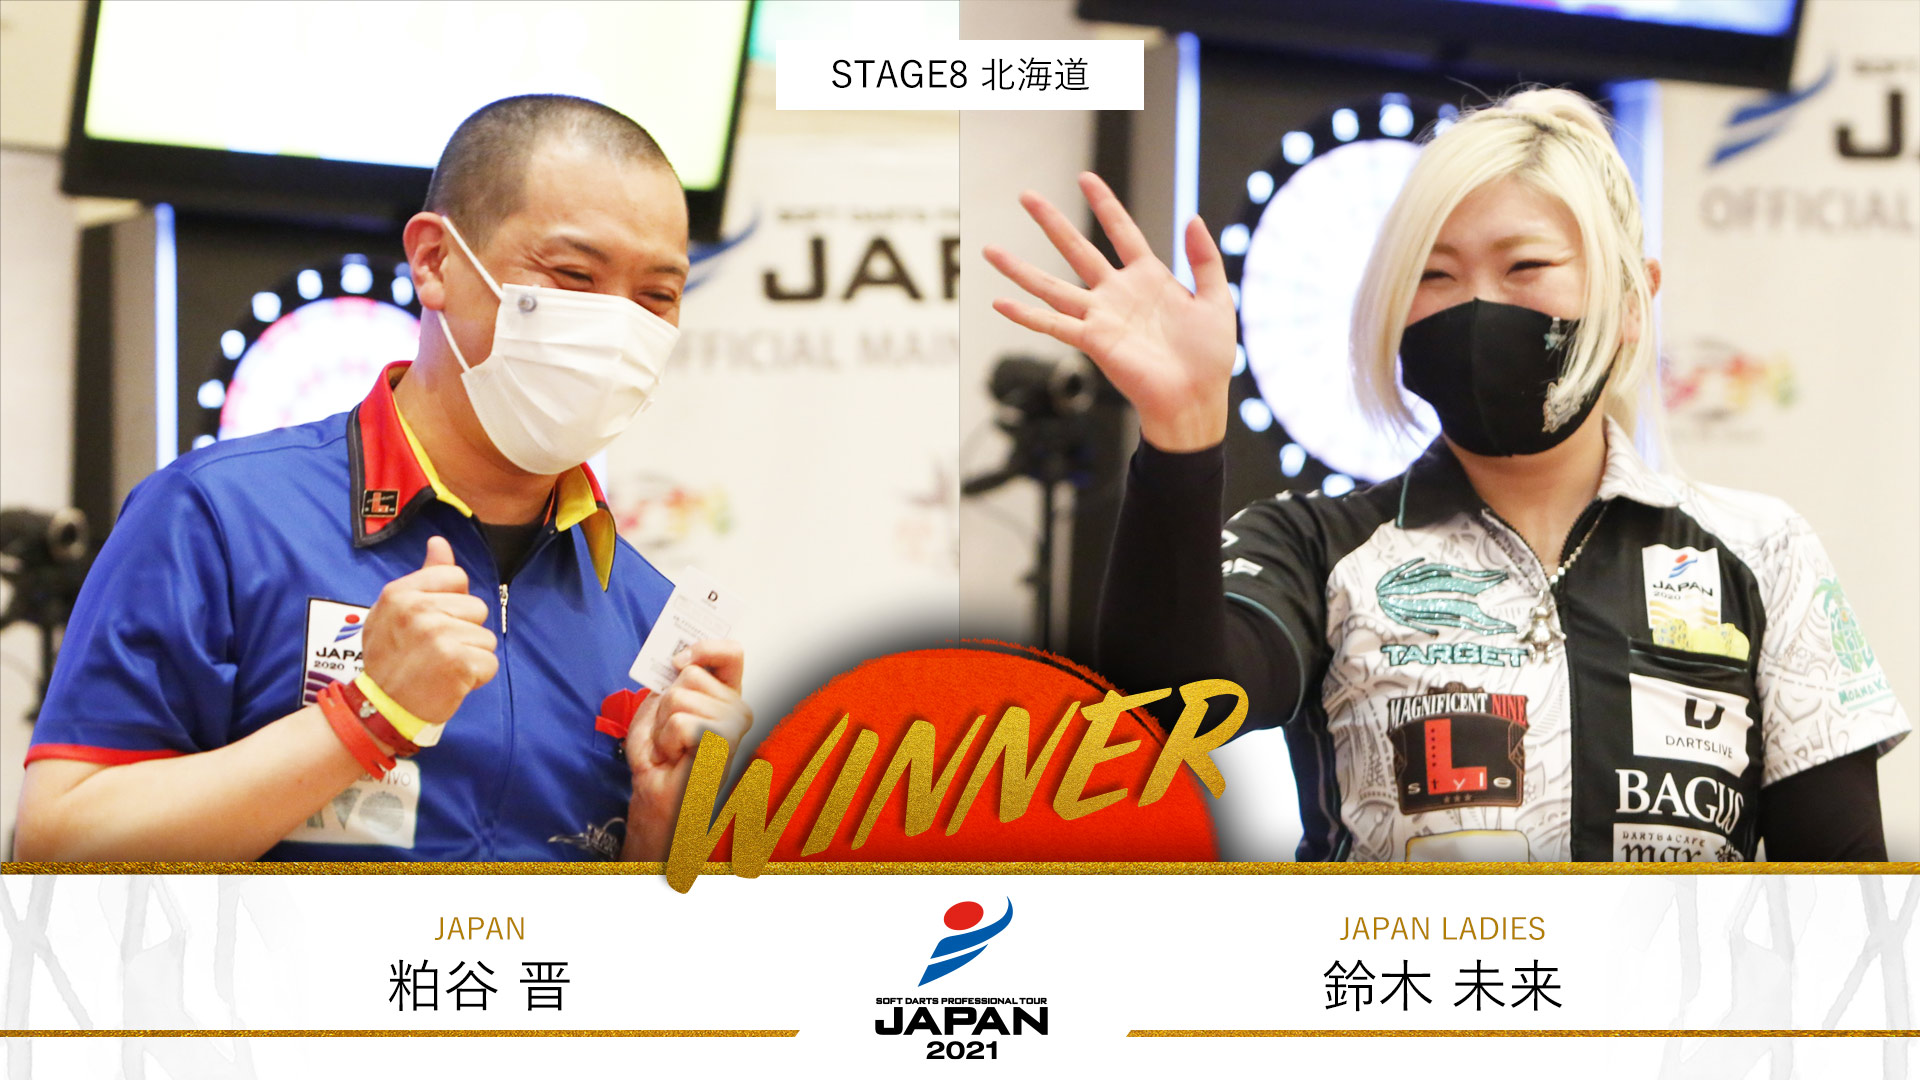 JAPAN2021 STAGE8 北海道 Winner